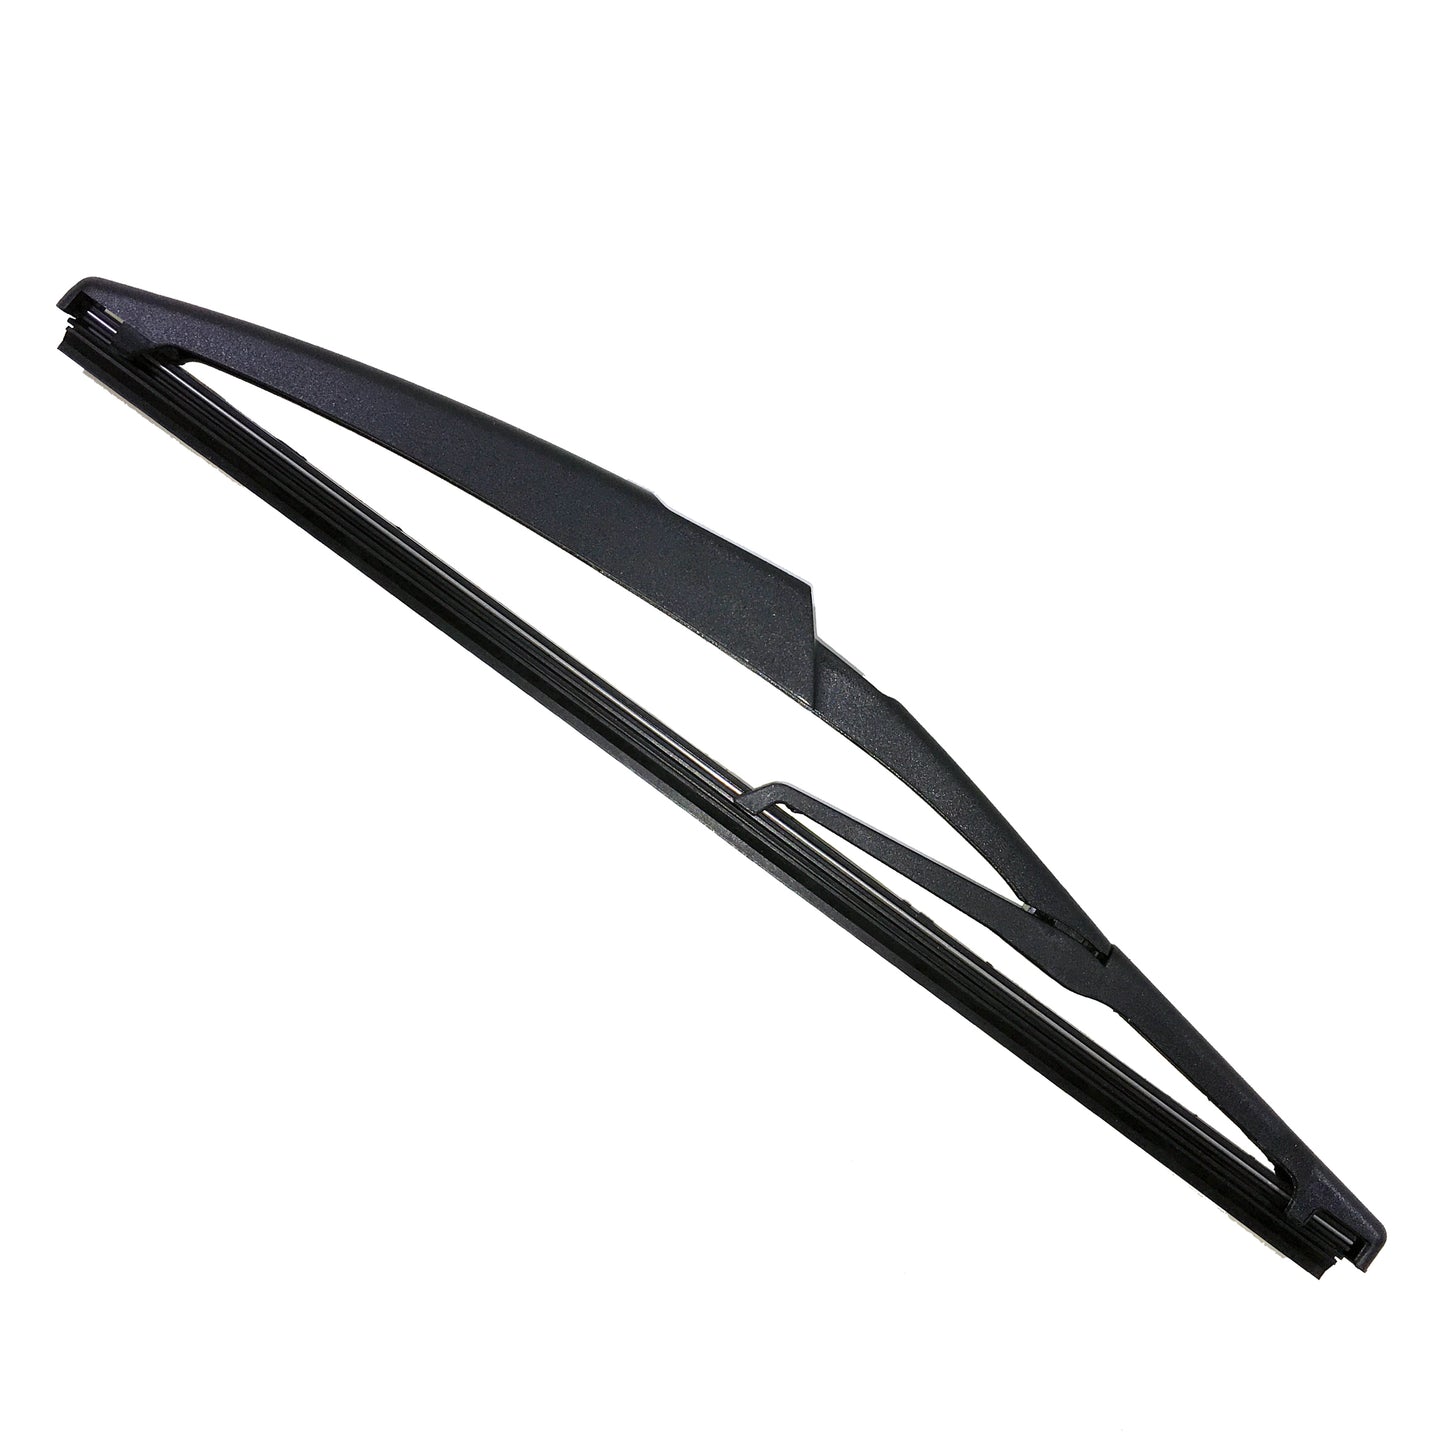 DS DS 3 Hatchback Apr 2015 to Apr 2020Rear Wiper Blade 